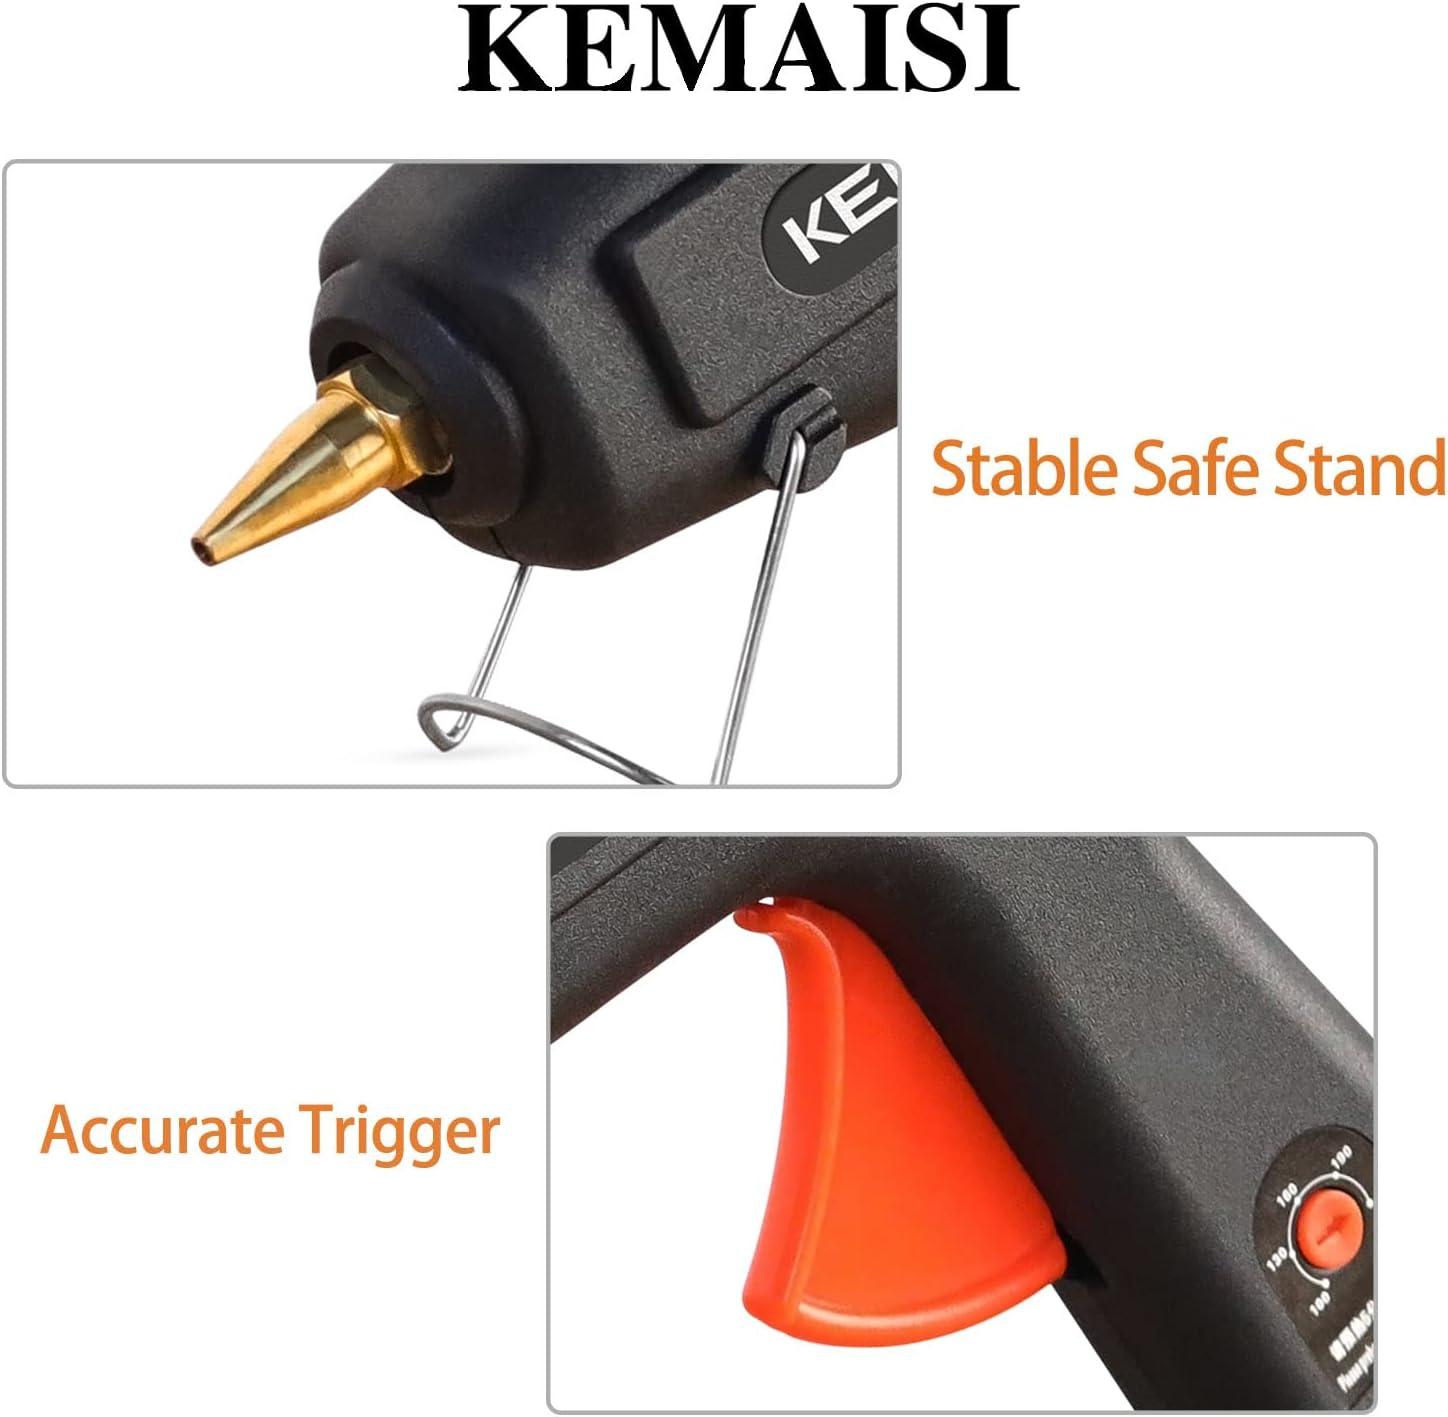  KEMAISI Hot Glue Gun Kit, 60W High Temp Hot Glue Guns with  25pcs Premium Glue Sticks, ON/Off Switch, No Drips Design, Fine Tip Glue  Gun for Crafts, School DIY Arts, Industry 